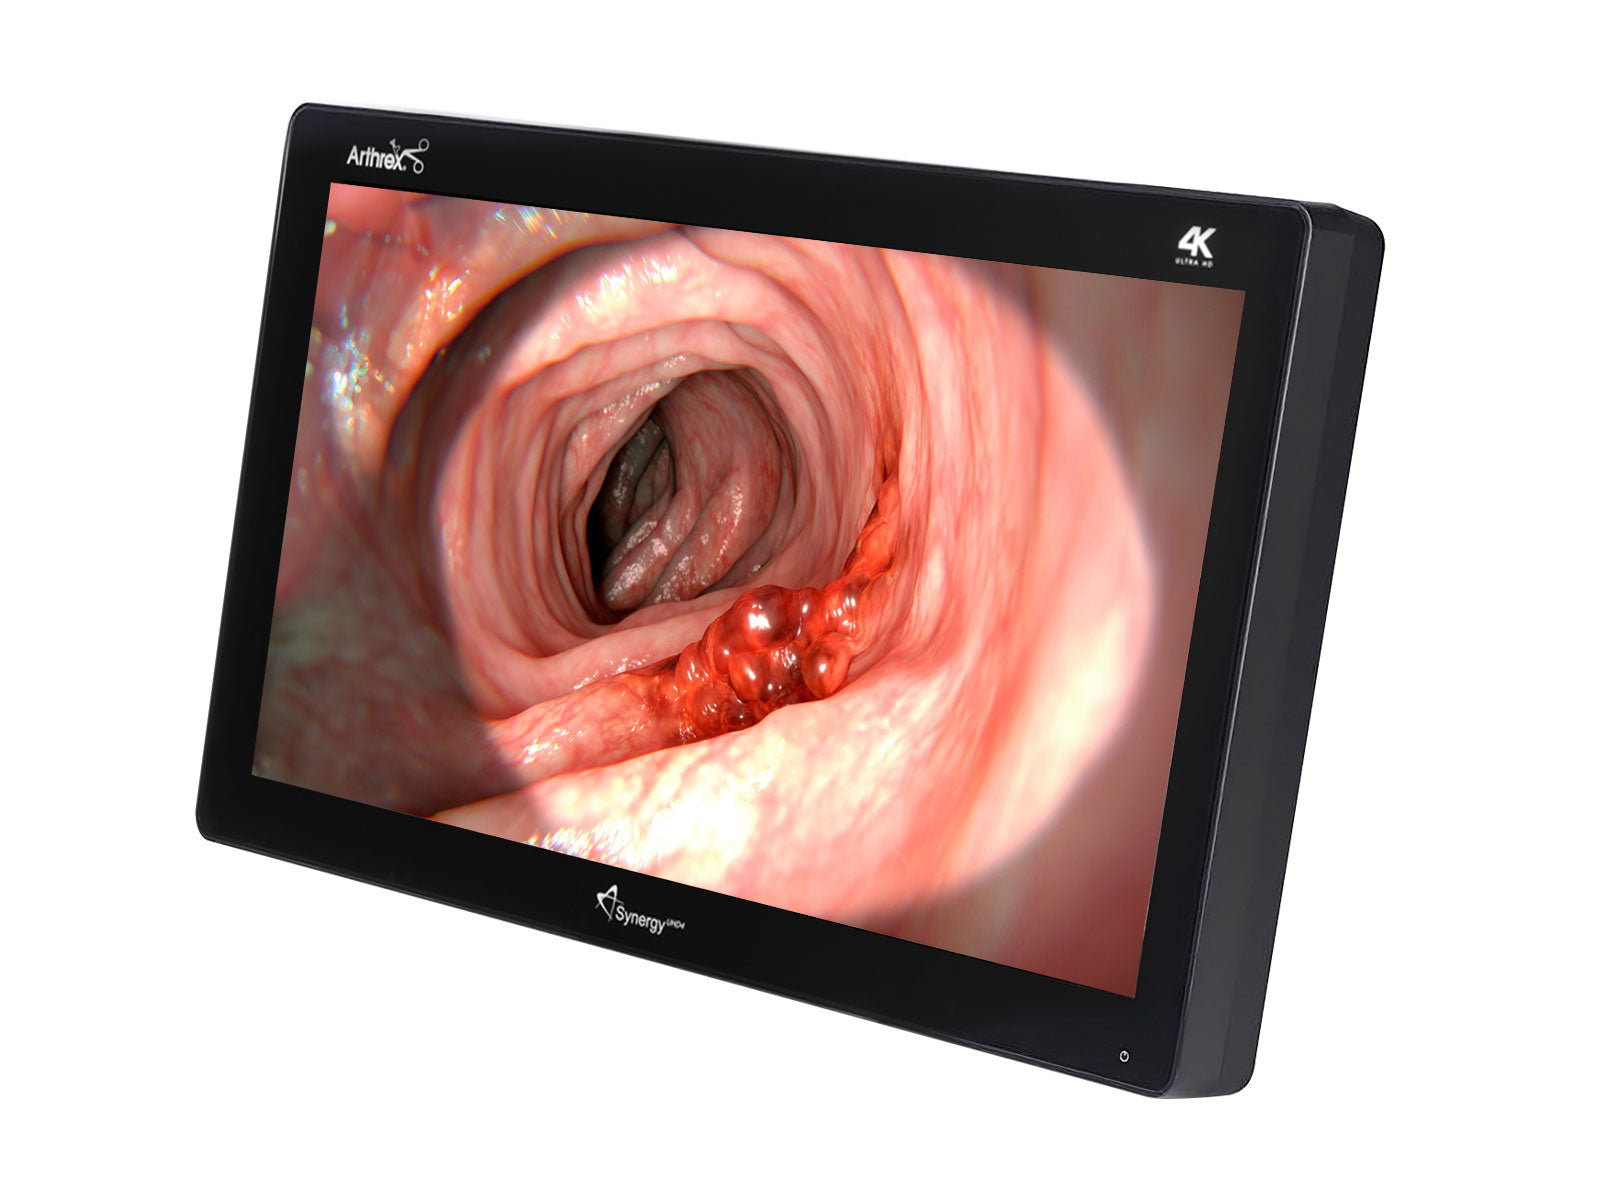 Barco Arthrex SynergyUHD4 32" 4K Color Surgical Medical Display Monitor (AR-3250-3210)